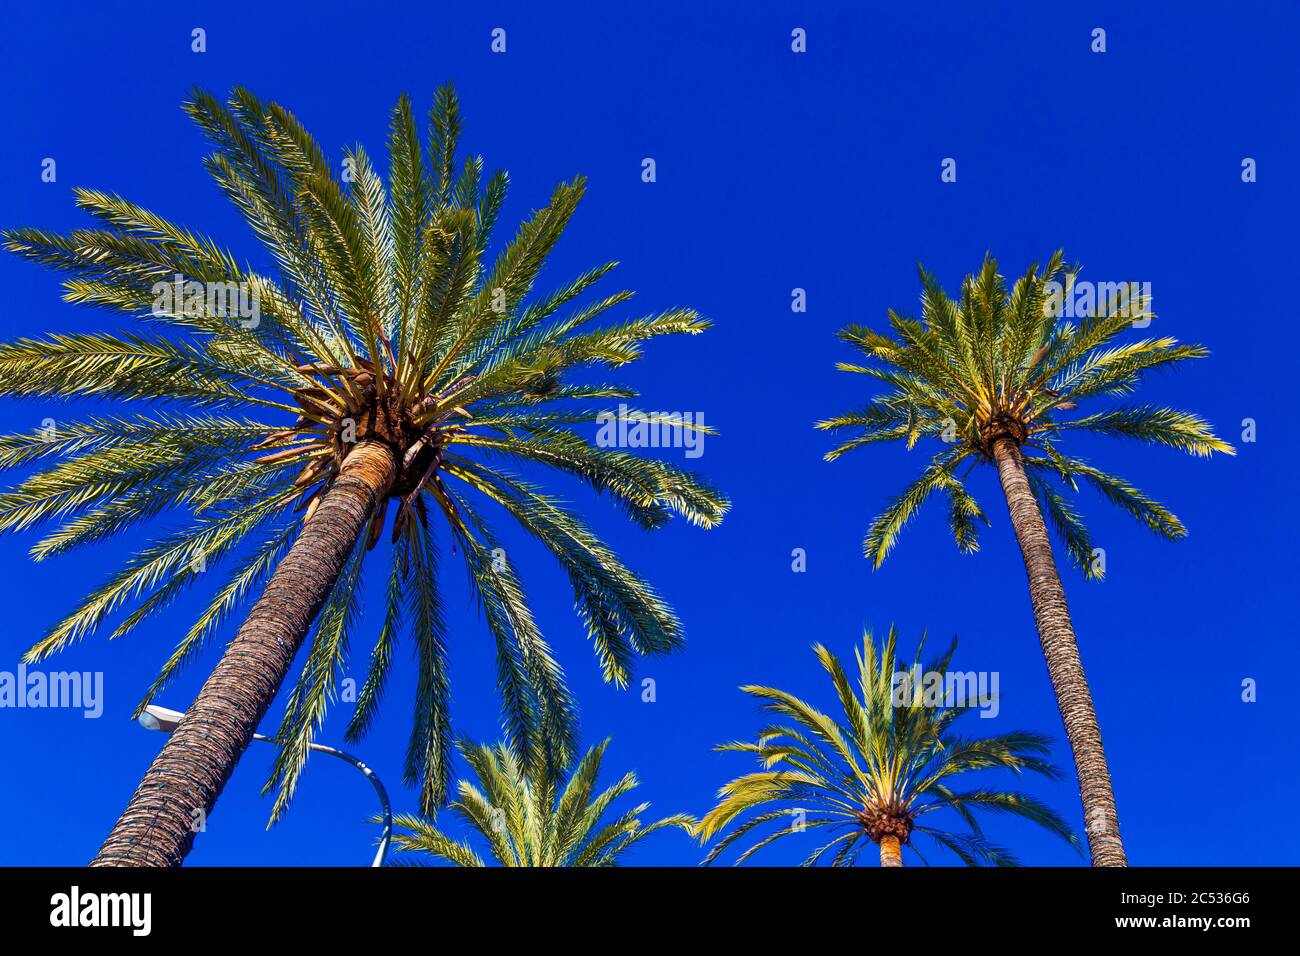 Palm trees in Palma, Mallorca, Spain Stock Photo